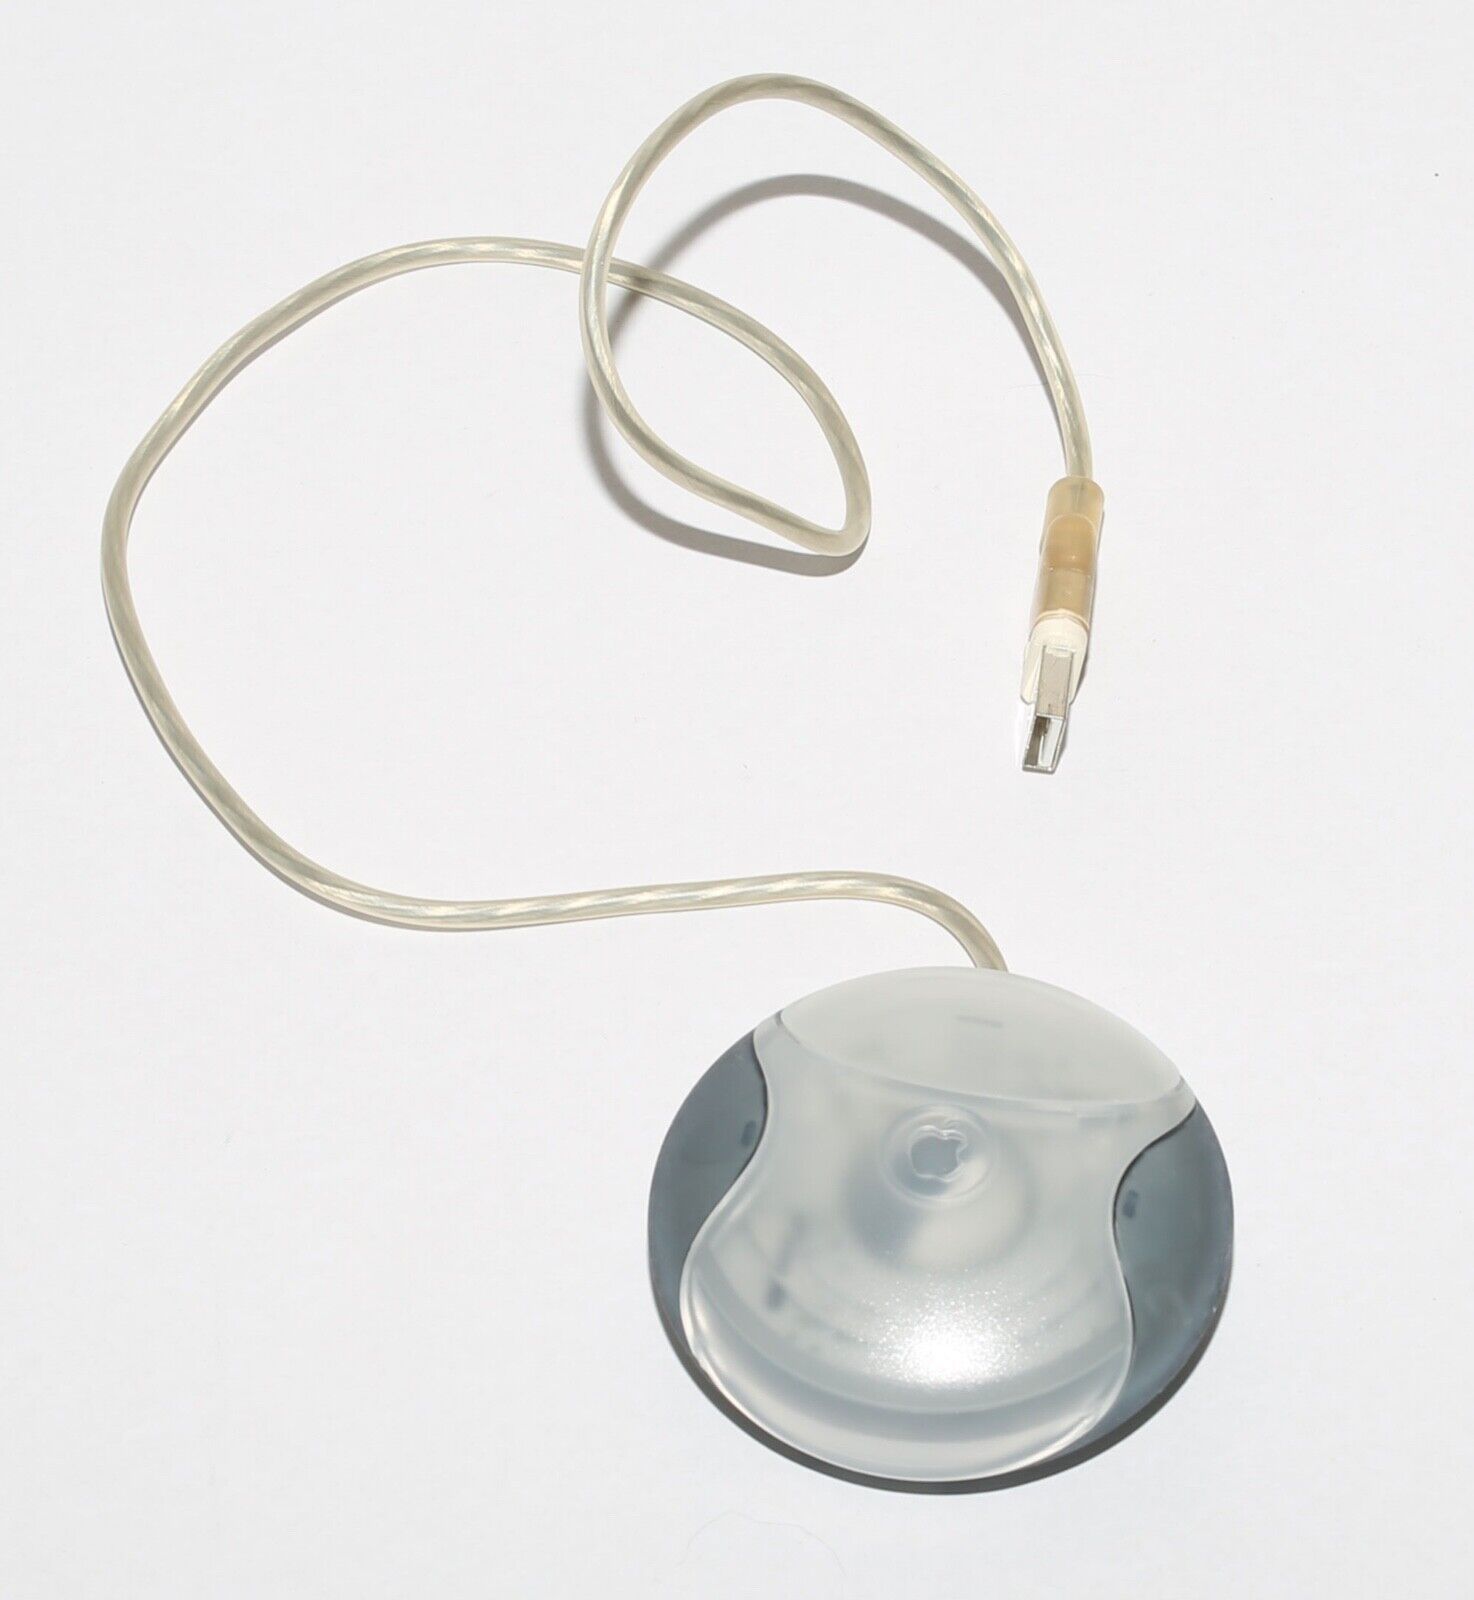 Vintage Apple Macintosh USB Mouse - Round Hockey Puck - G4 - M4848